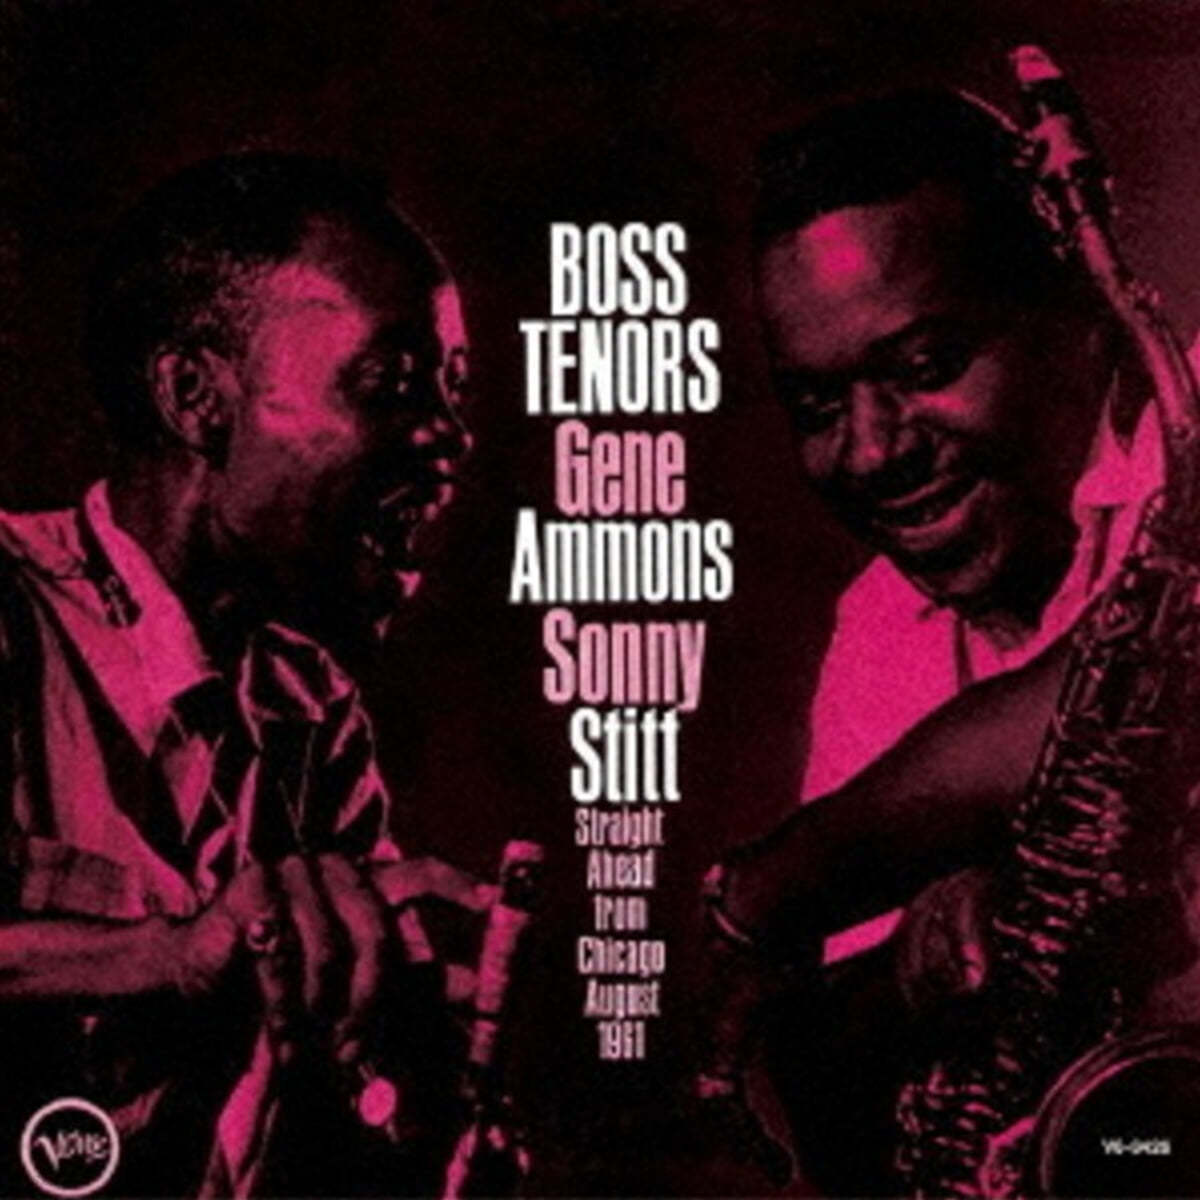 Gene Ammons / Sonny Stitt (진 애먼스 / 소니 스팃) - Boss Tenors: Straight Ahead From Chicago 1961 